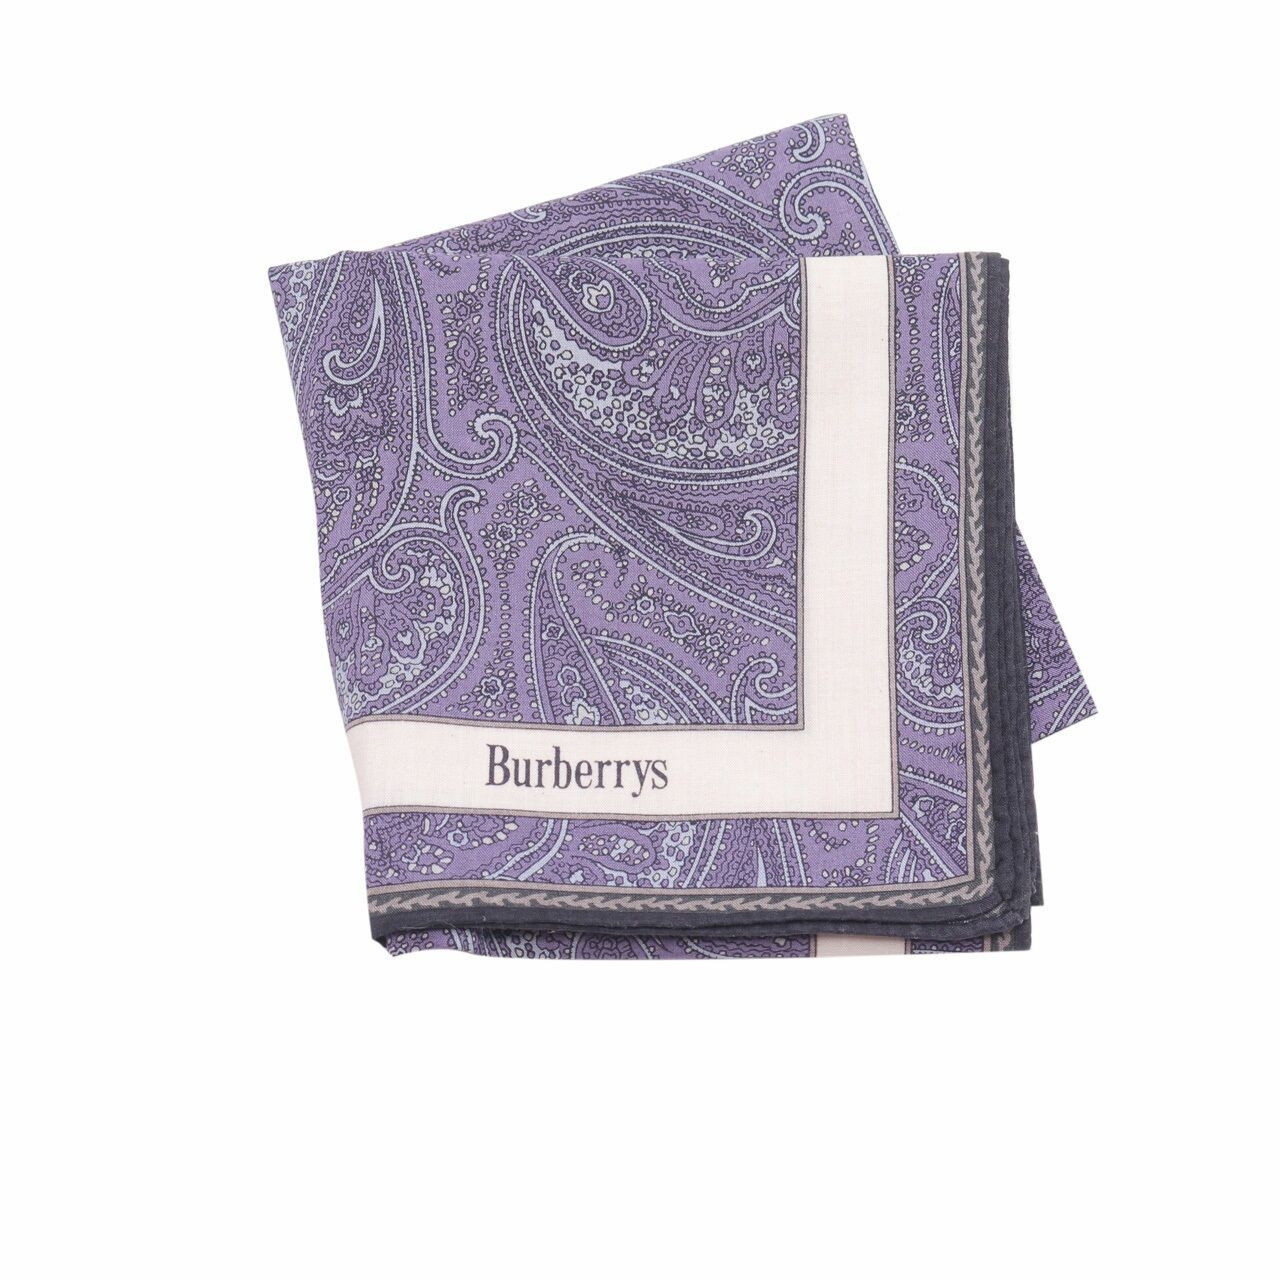 Burberry Purple Pattern Scarf